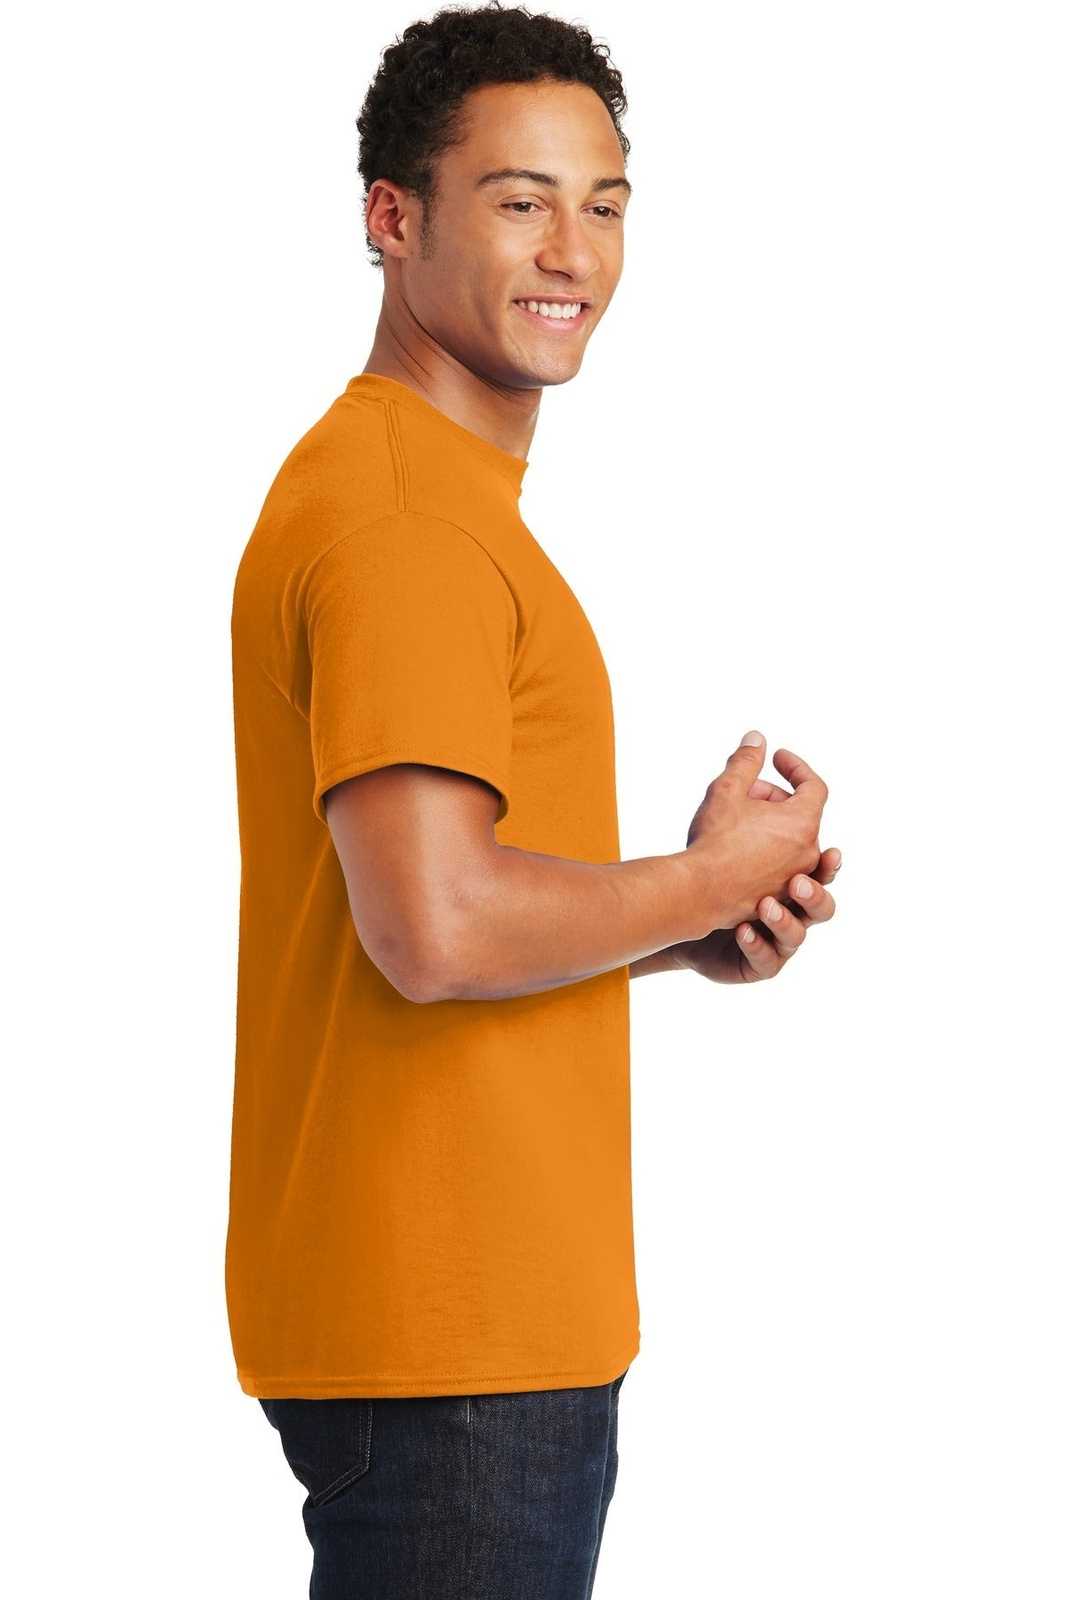 Gildan 8000 Dryblend 50 Cotton/50 Poly T-Shirt - Tennessee Orange - HIT a Double